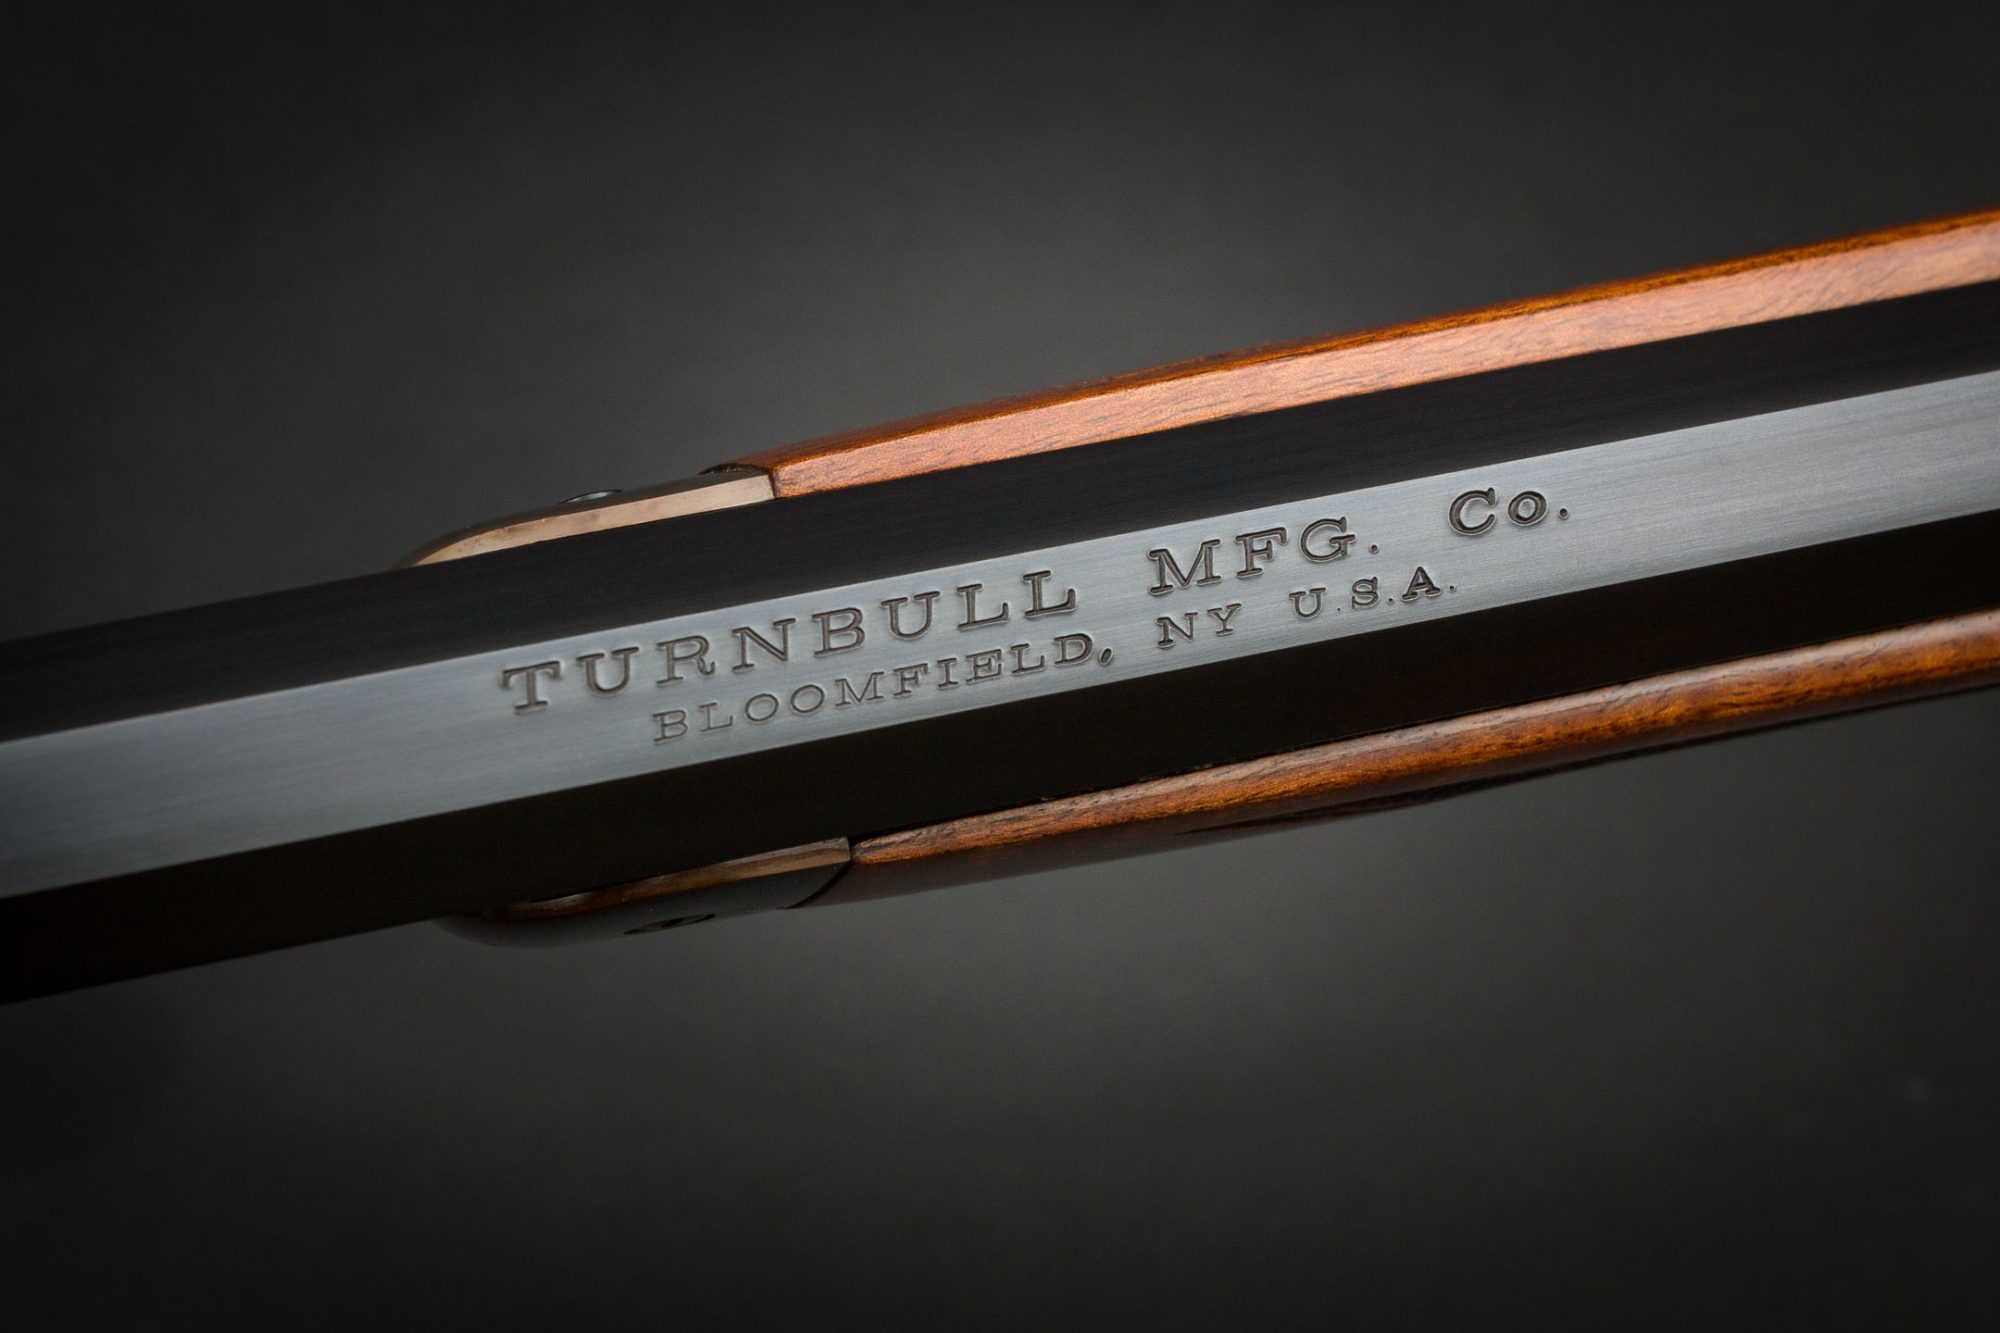 Turnbull Model 1886 Deluxe Takedown, built in 2010, chambered in 475 Turnbull, 22-inch barrel